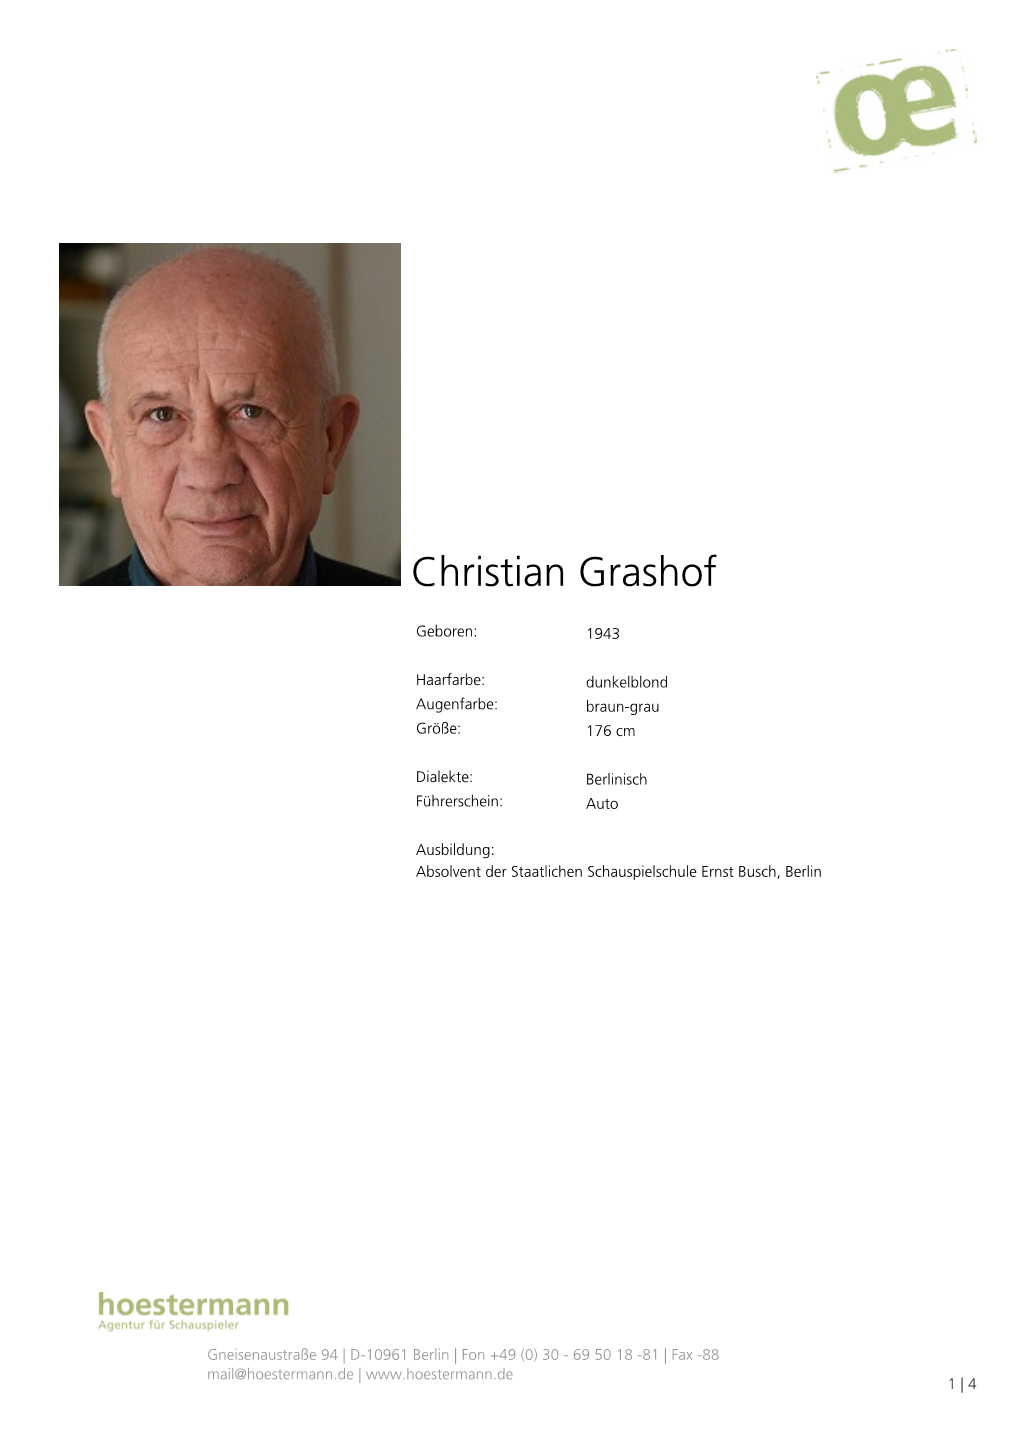 Christian Grashof